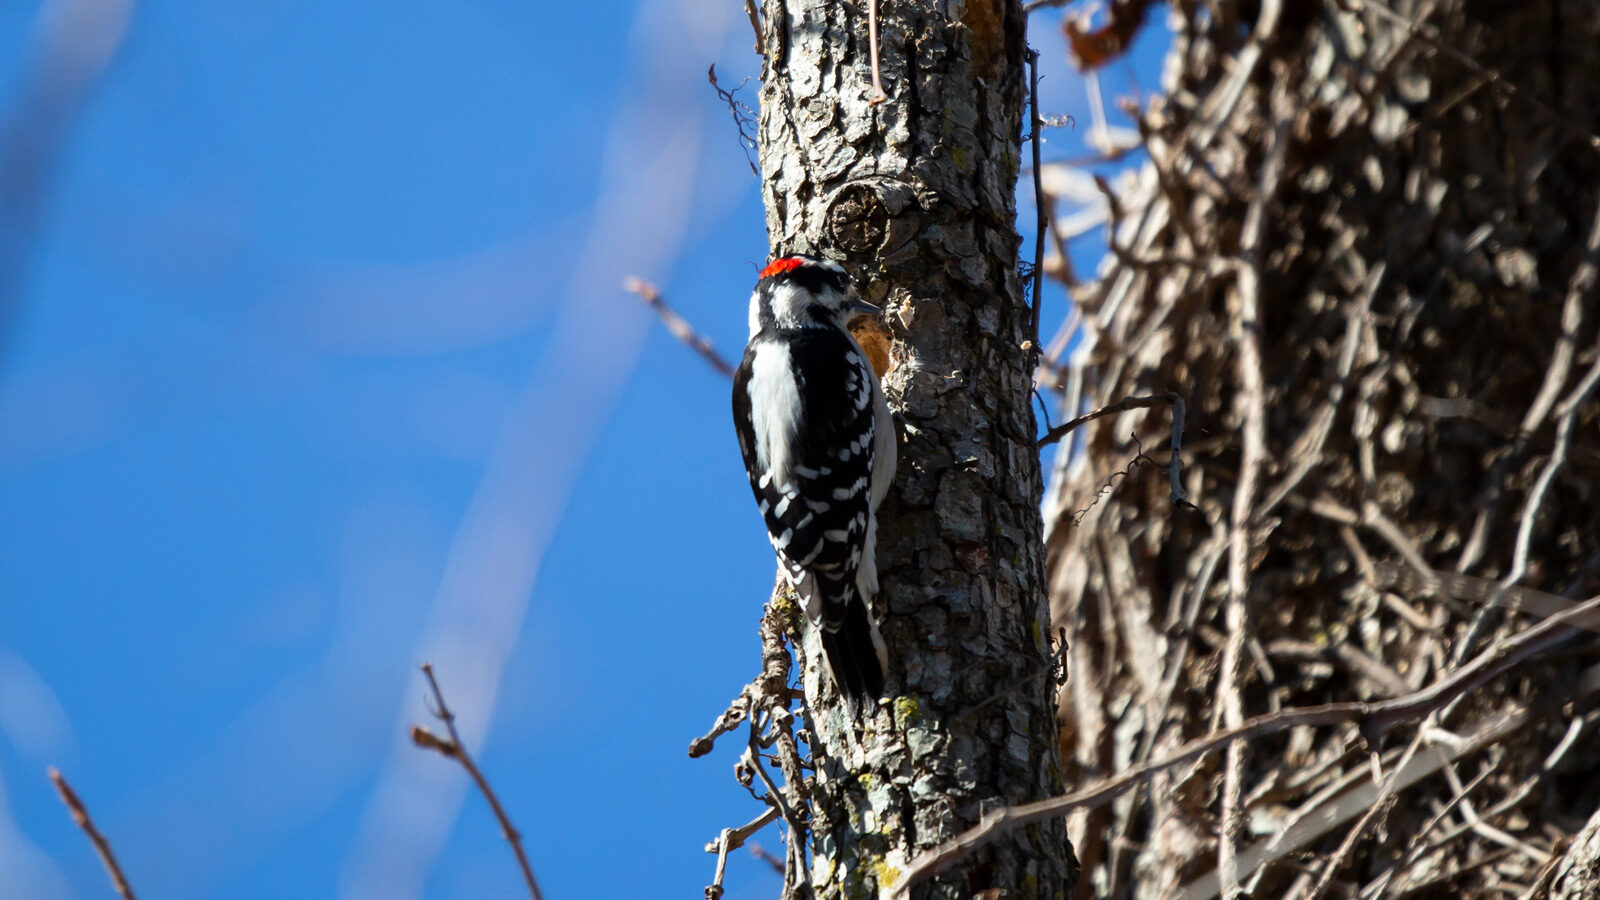 Hairy woodpecker foraging in a tree trunk